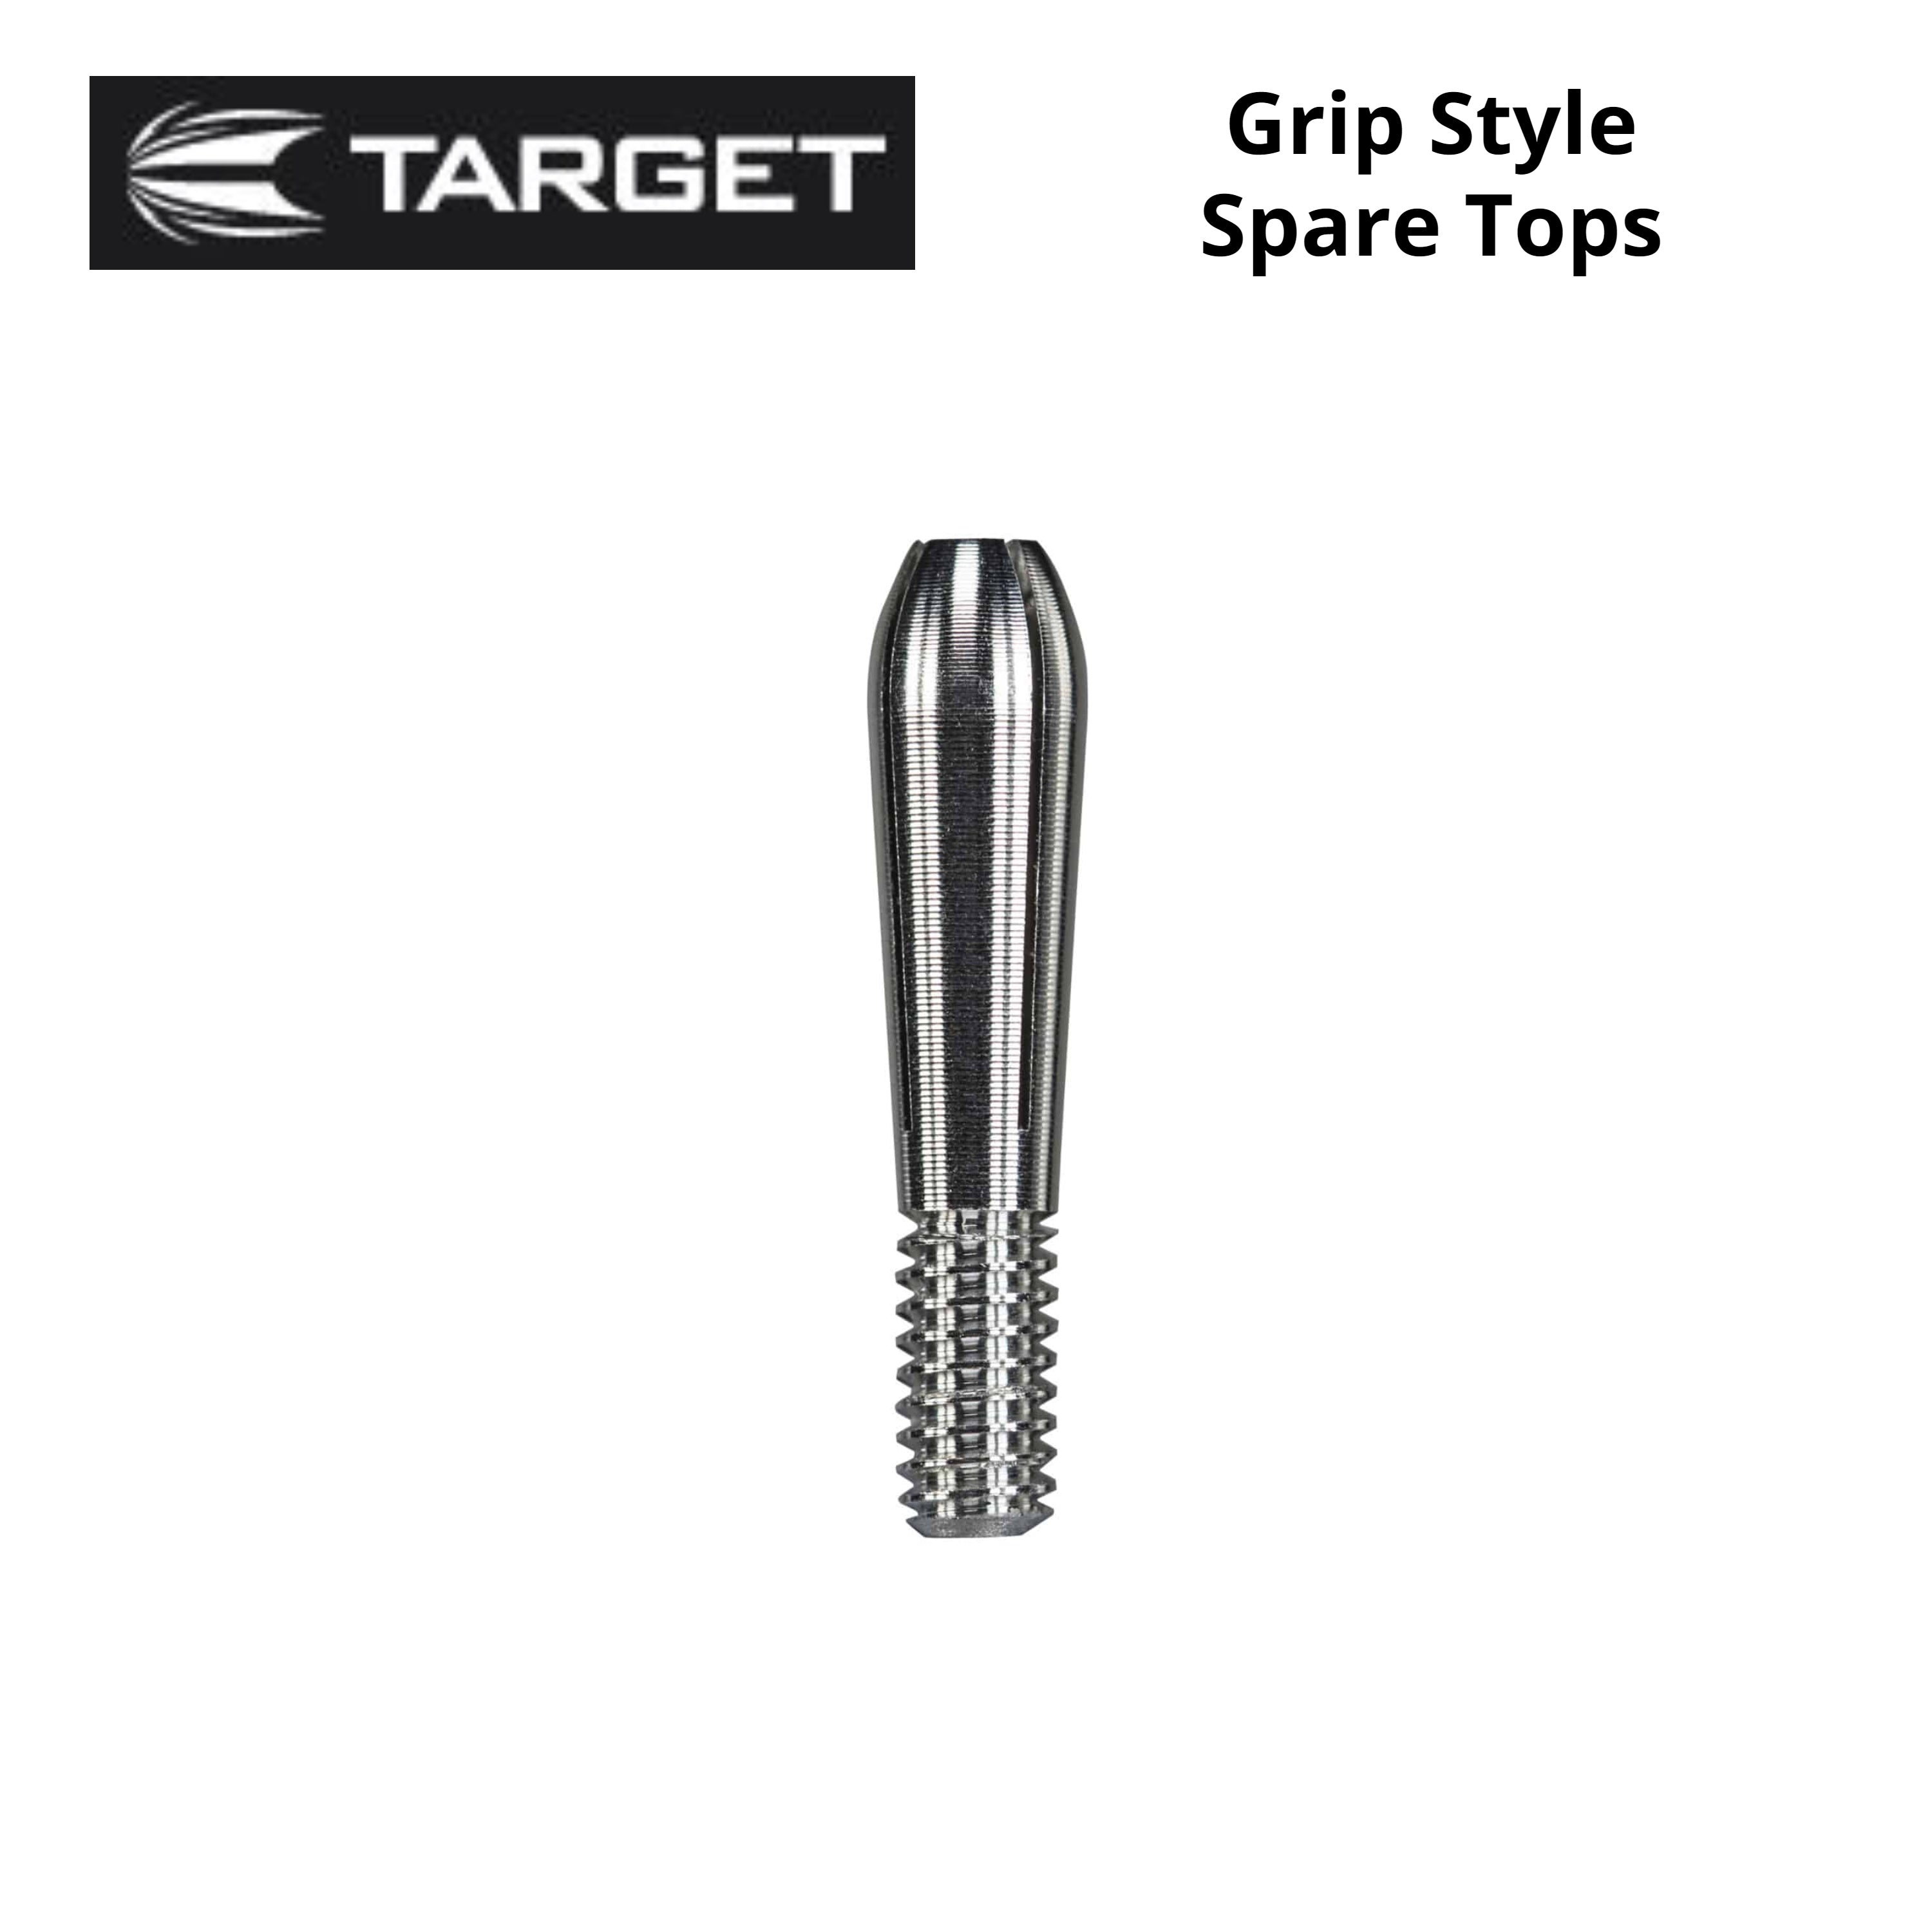 Target Grip Style Ersatztops